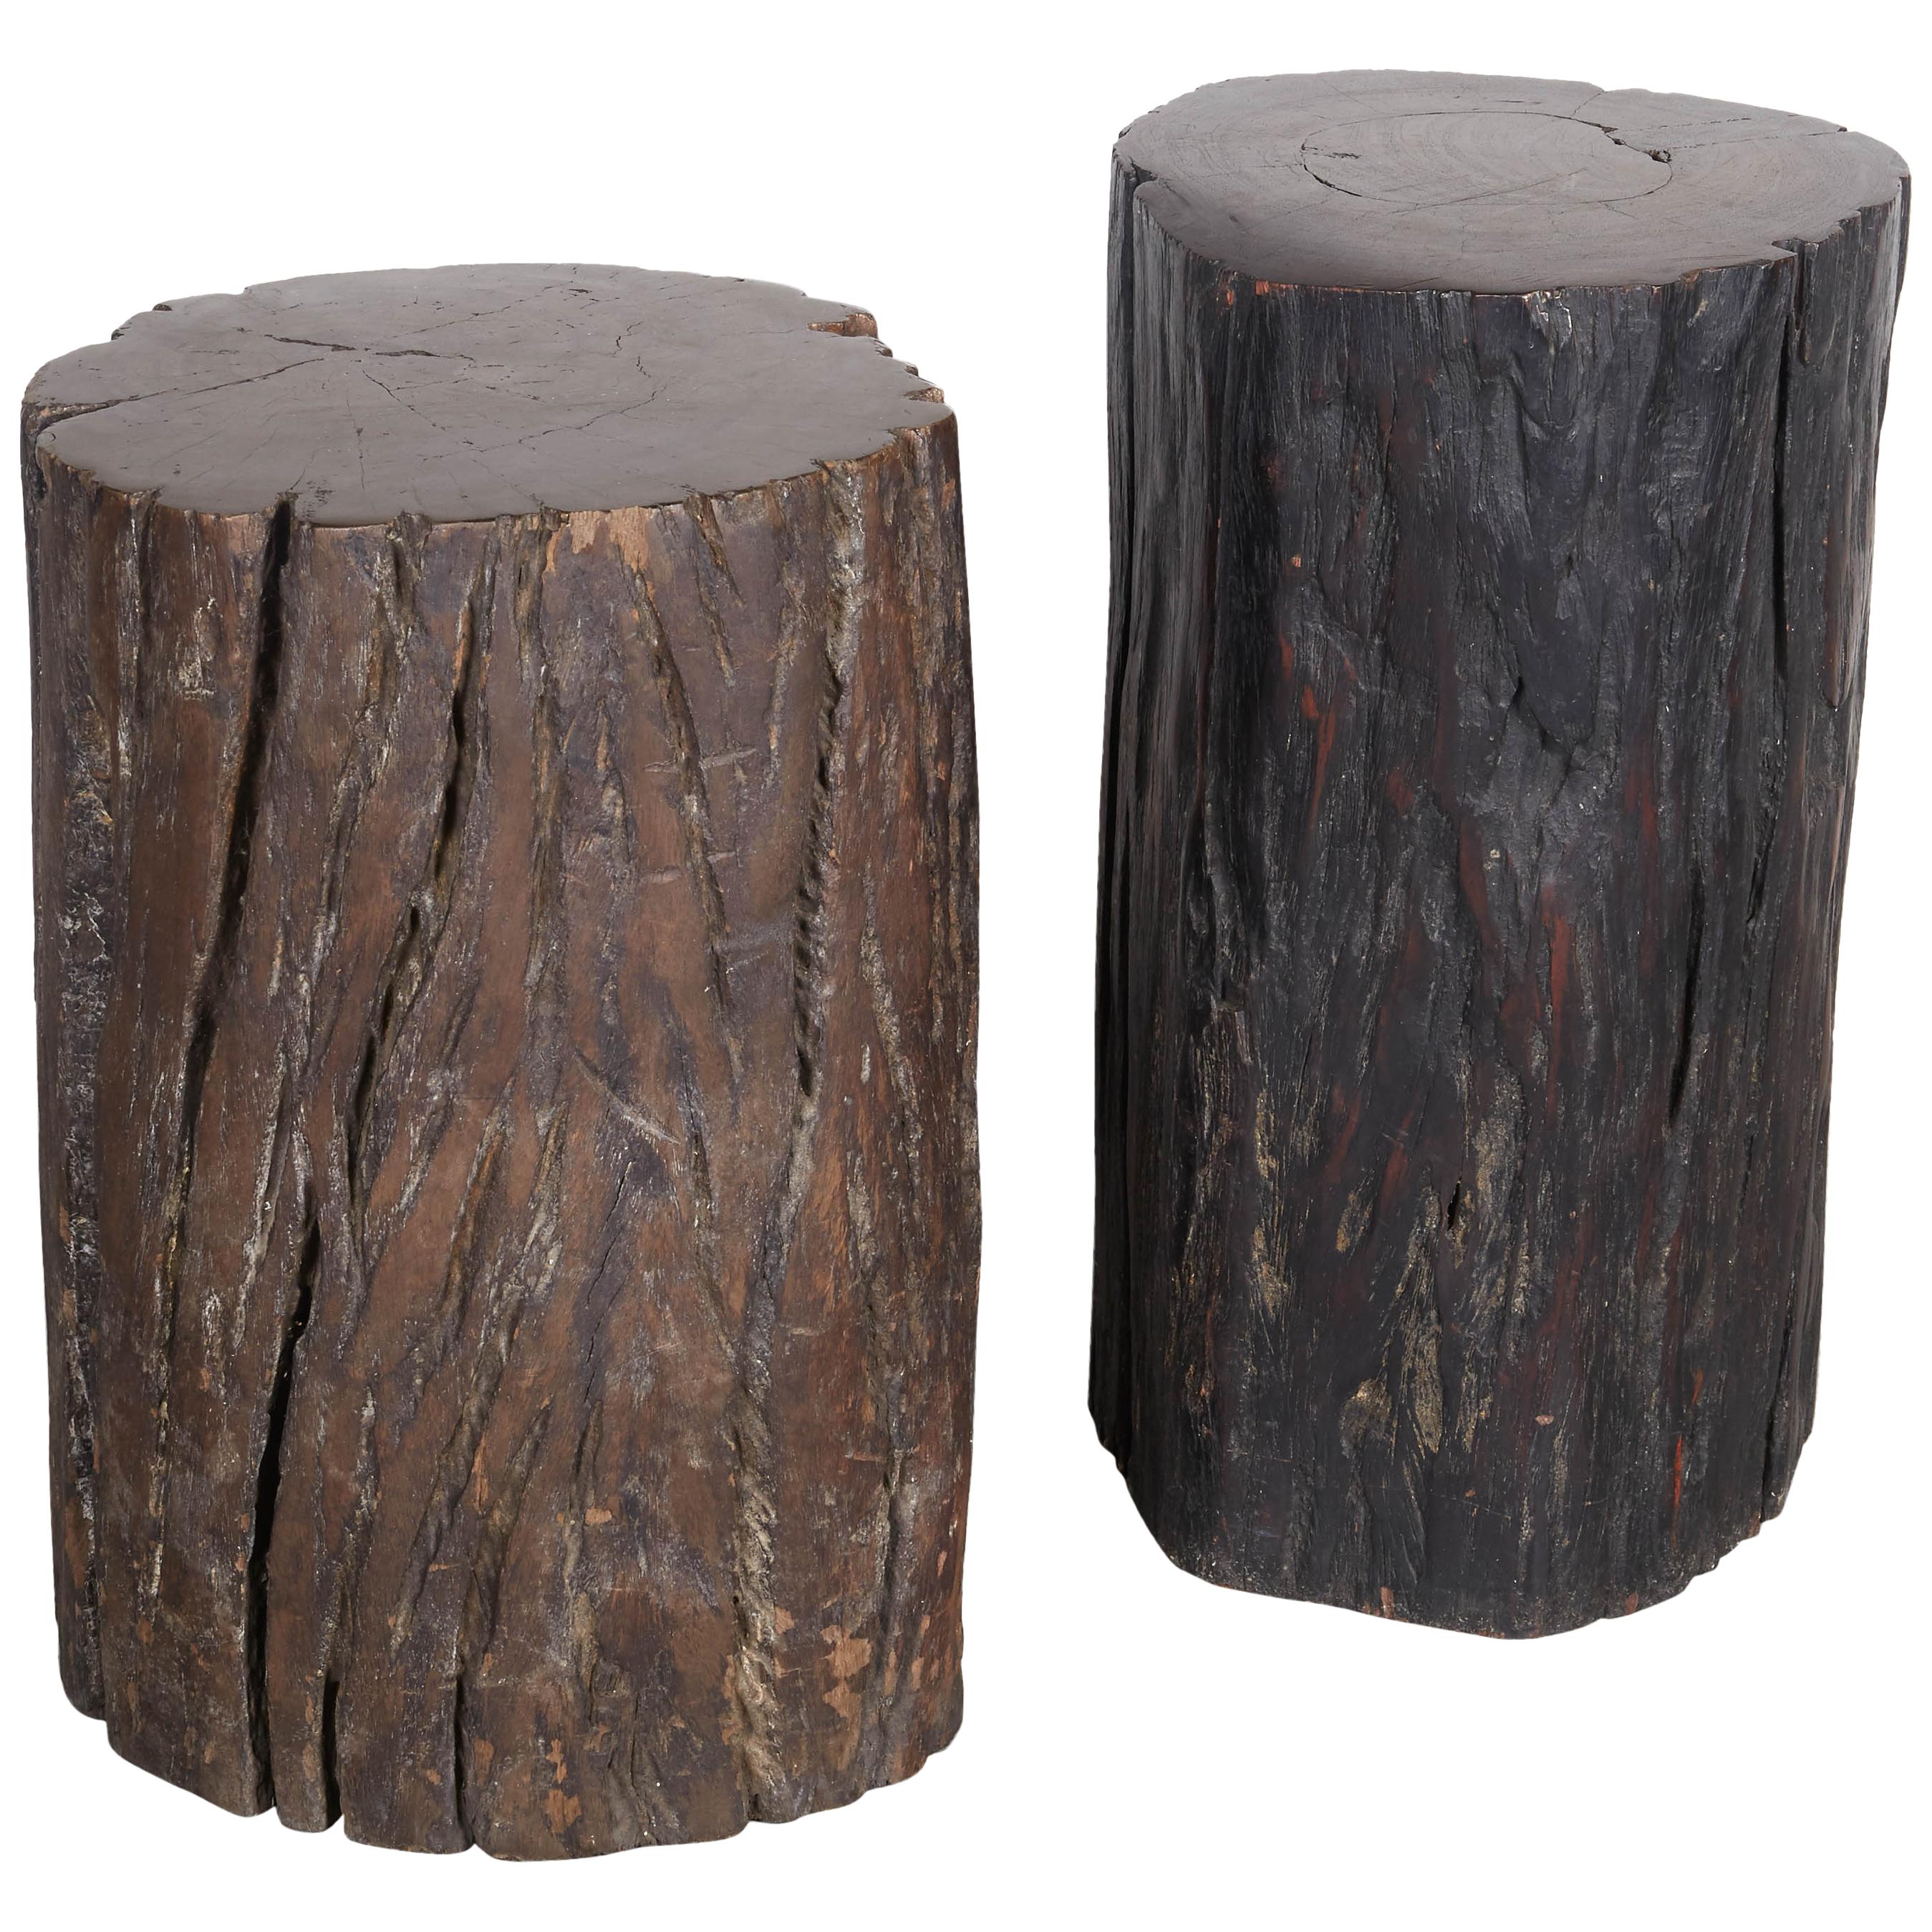 Primitive, Heavy Tree Stump Stools, Side Tables